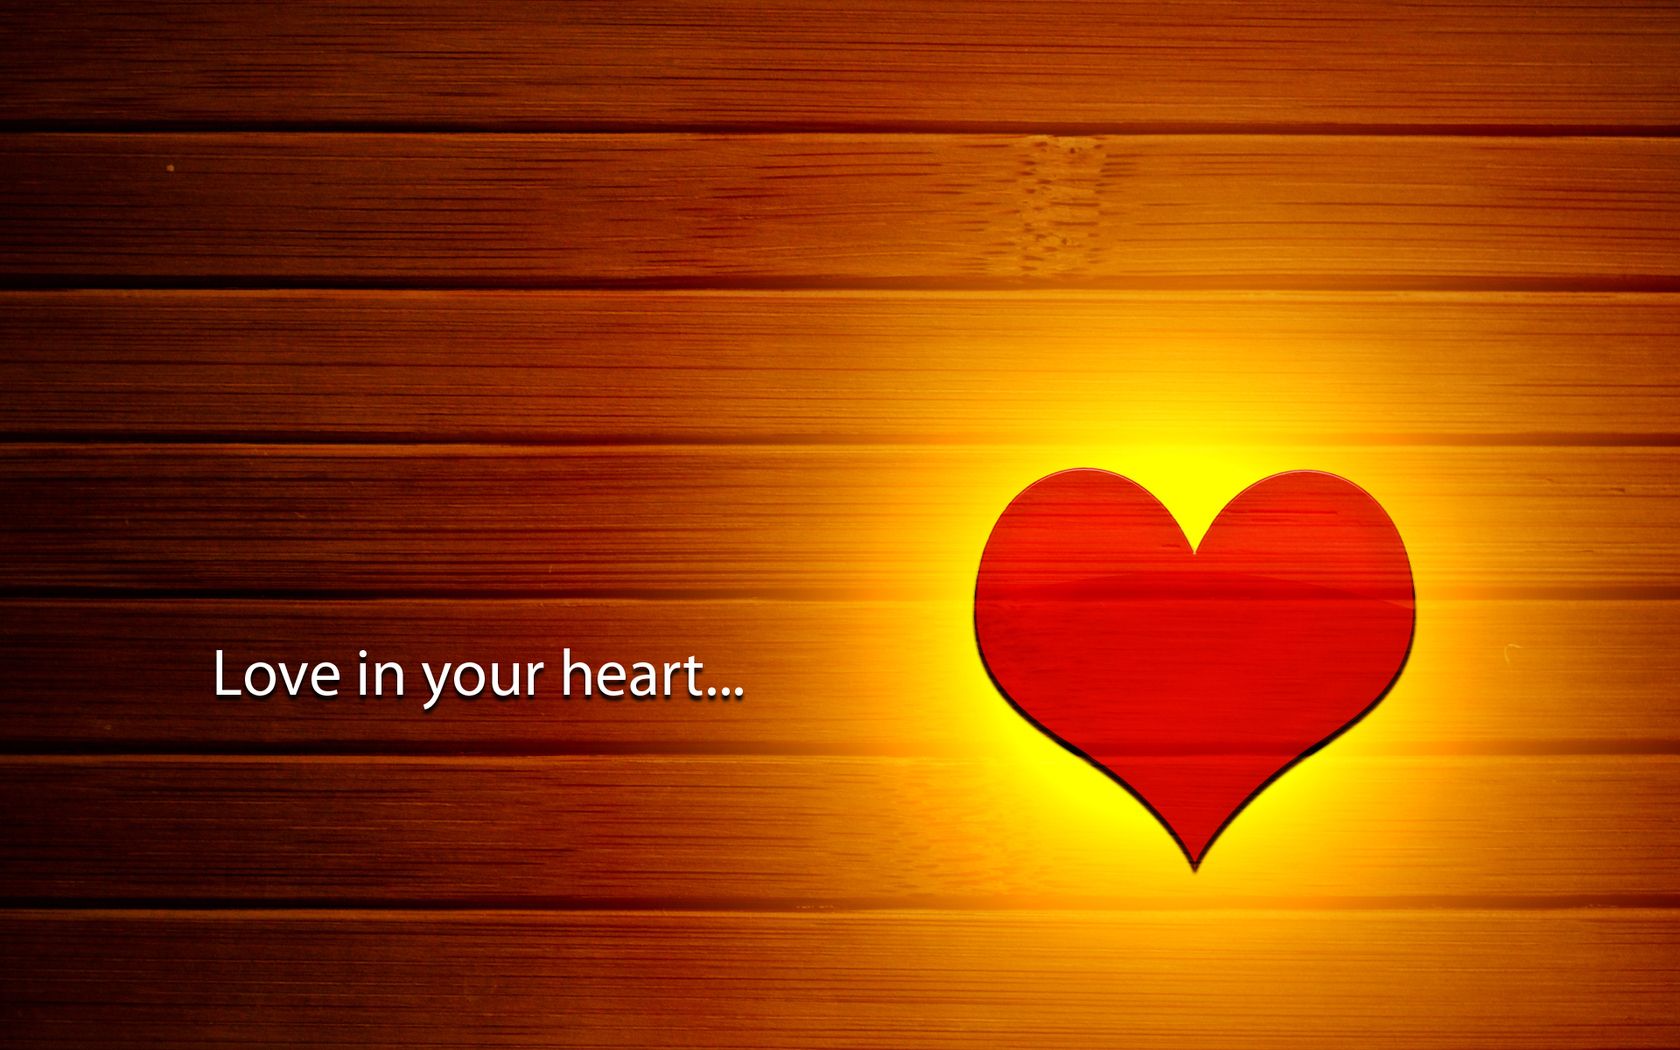 Download True Love in your Heart Romantic HD Wallpapers - HD